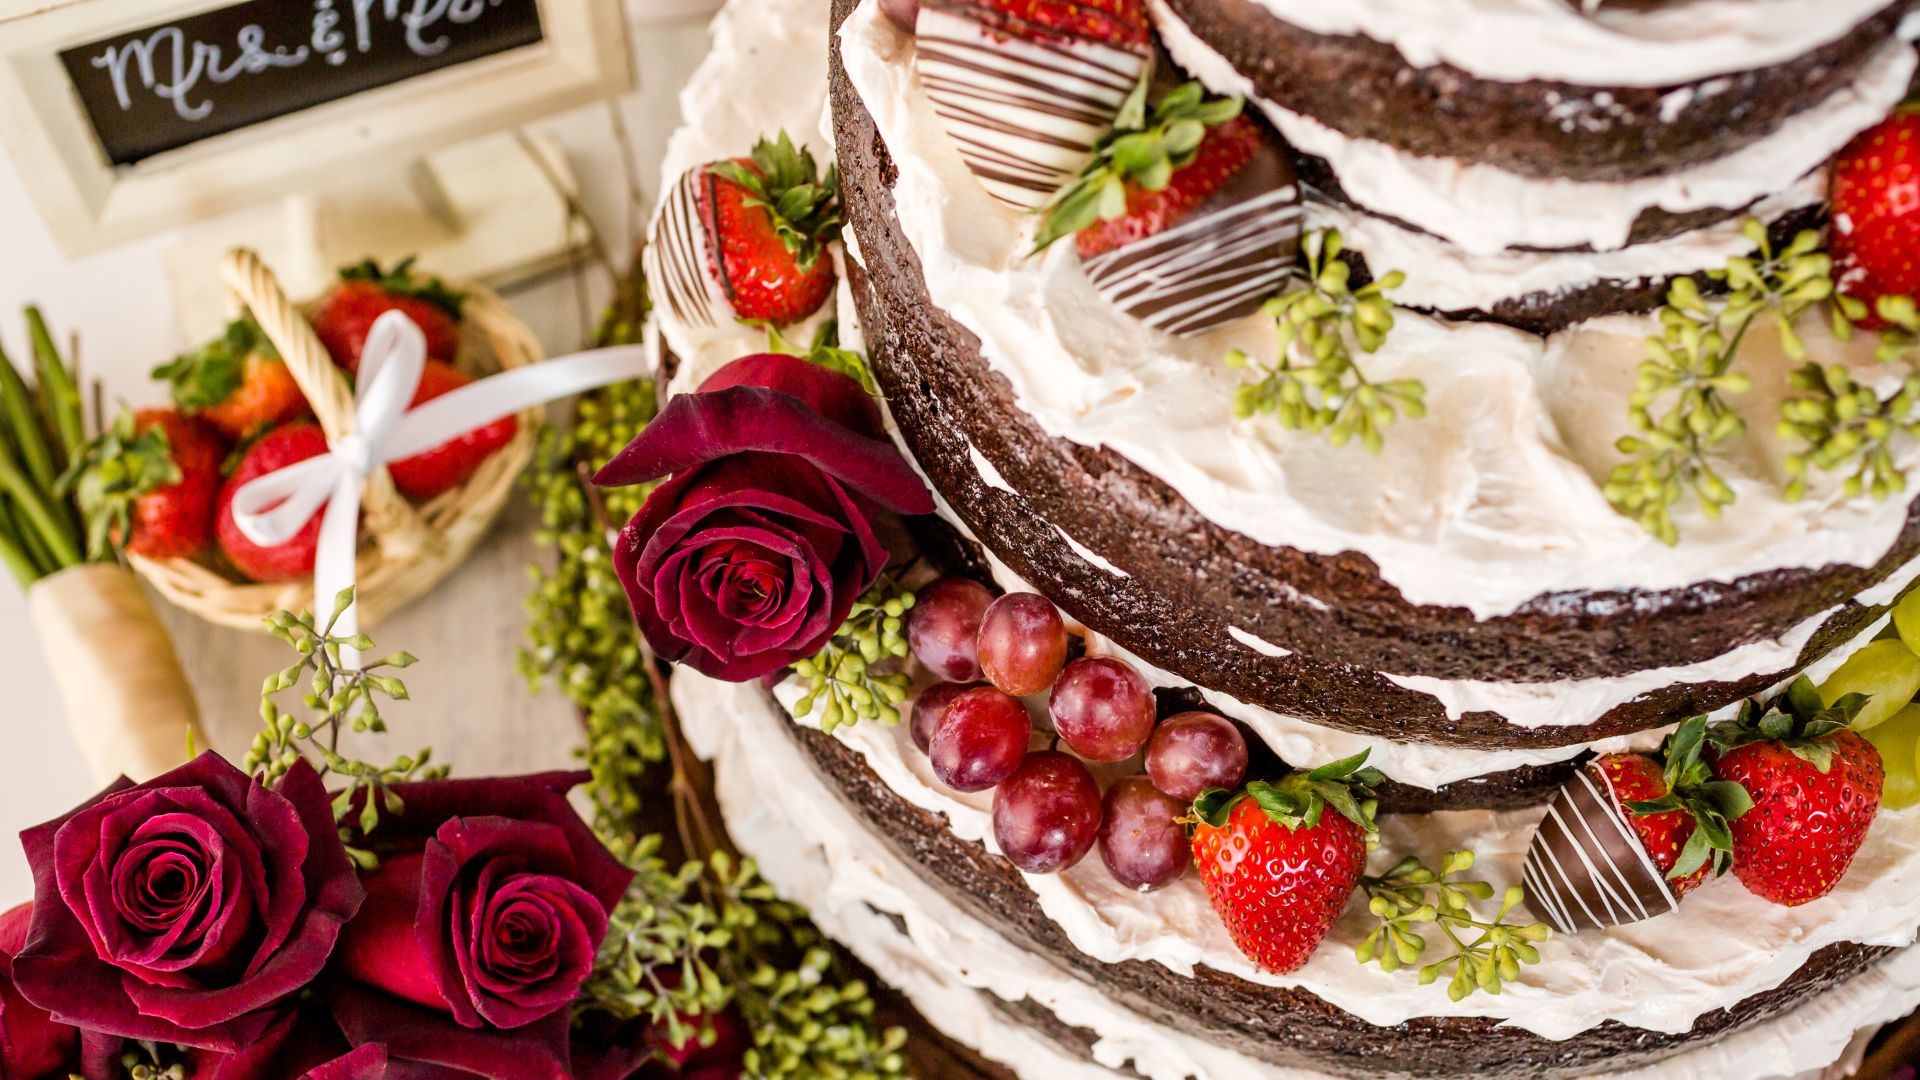 Simple Non-Fondant Wedding Cake Ideas - 4 Fantastic Options